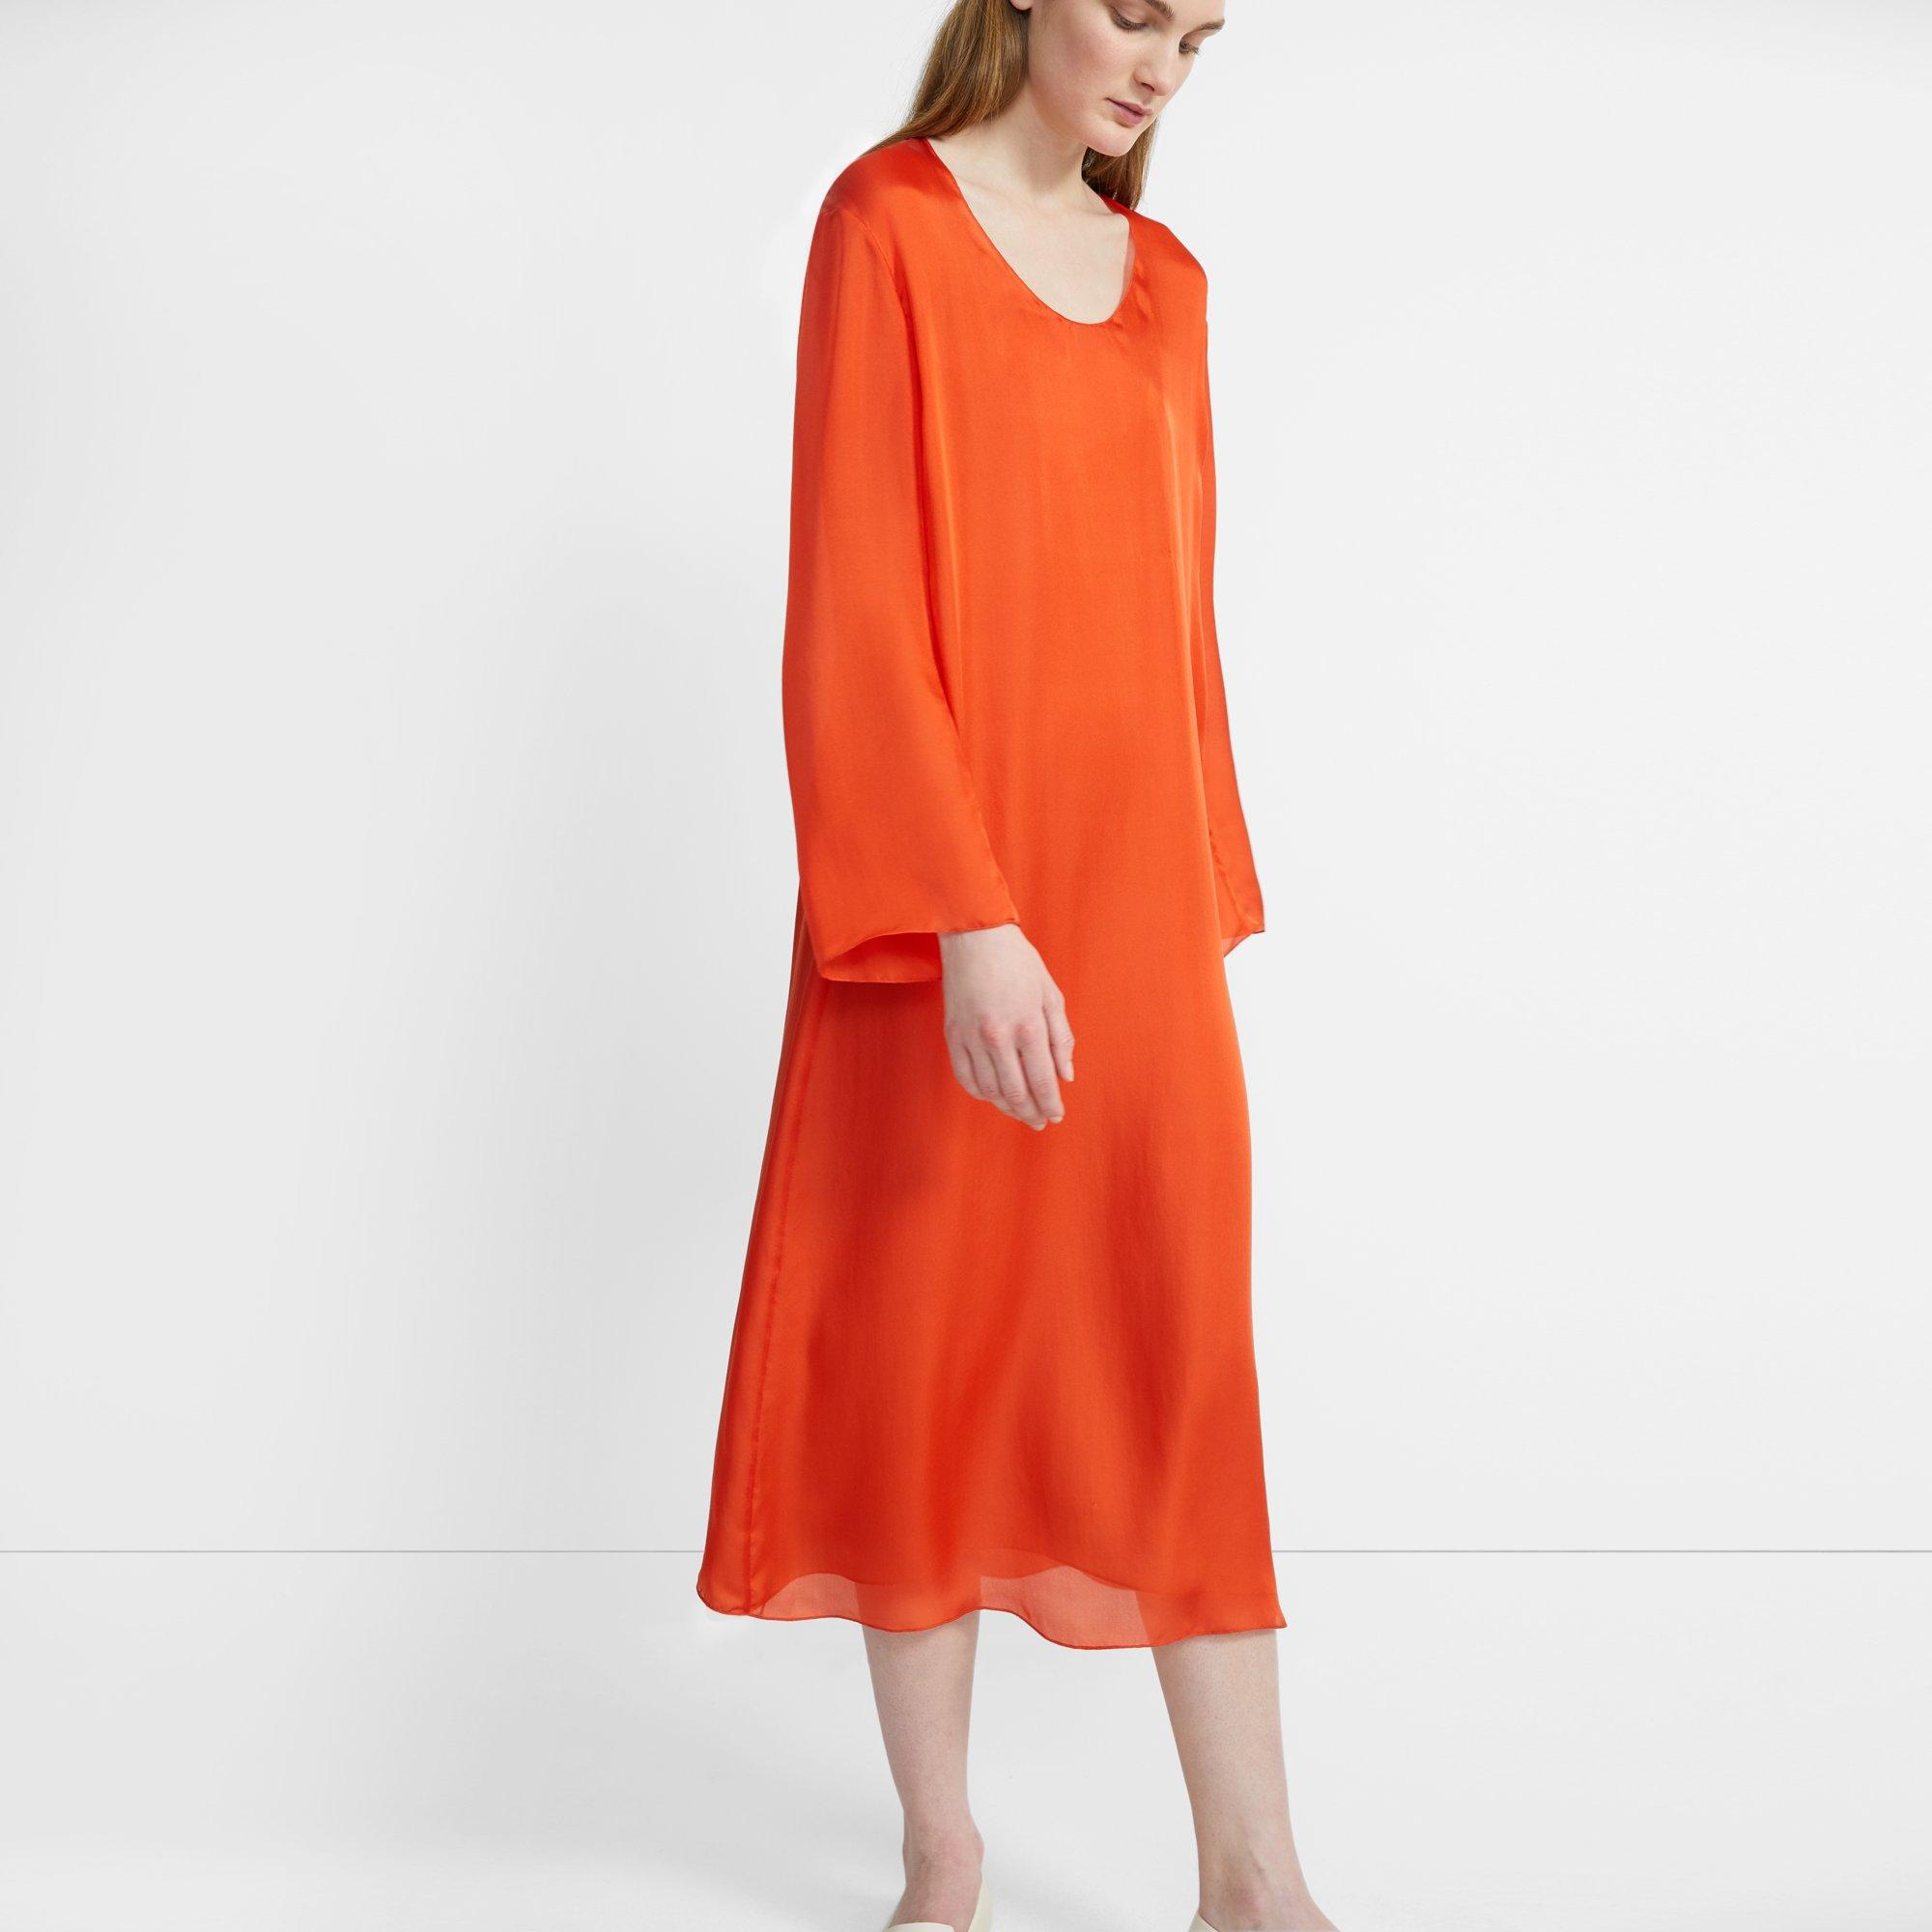 theory orange dress